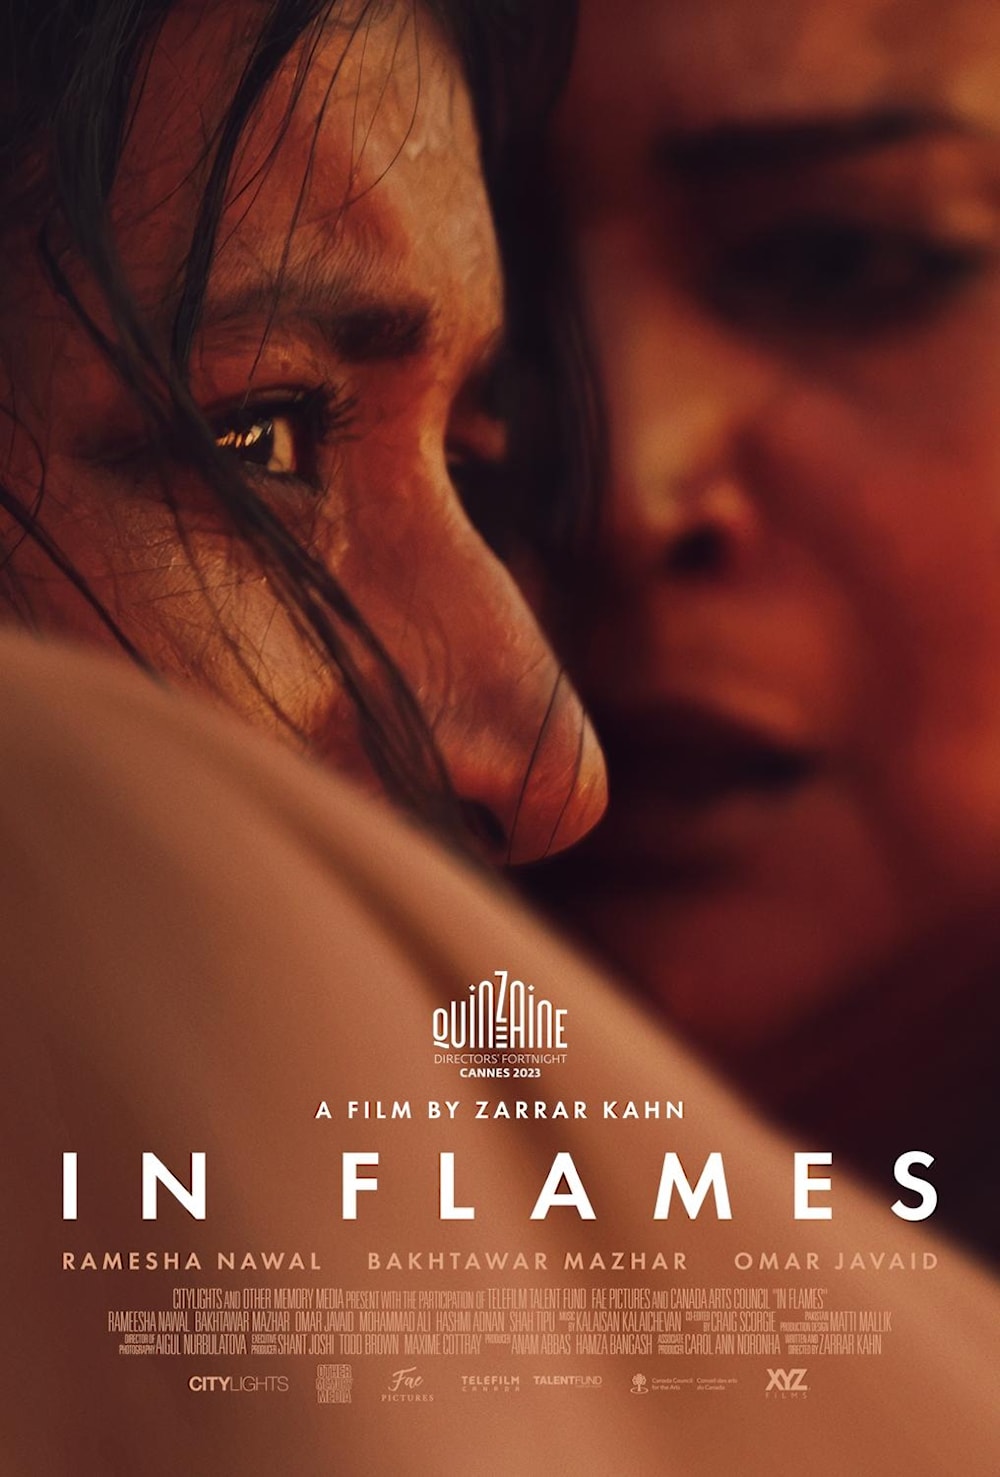 In flames: ملصق الفيلم وفيه الأم والإبنة